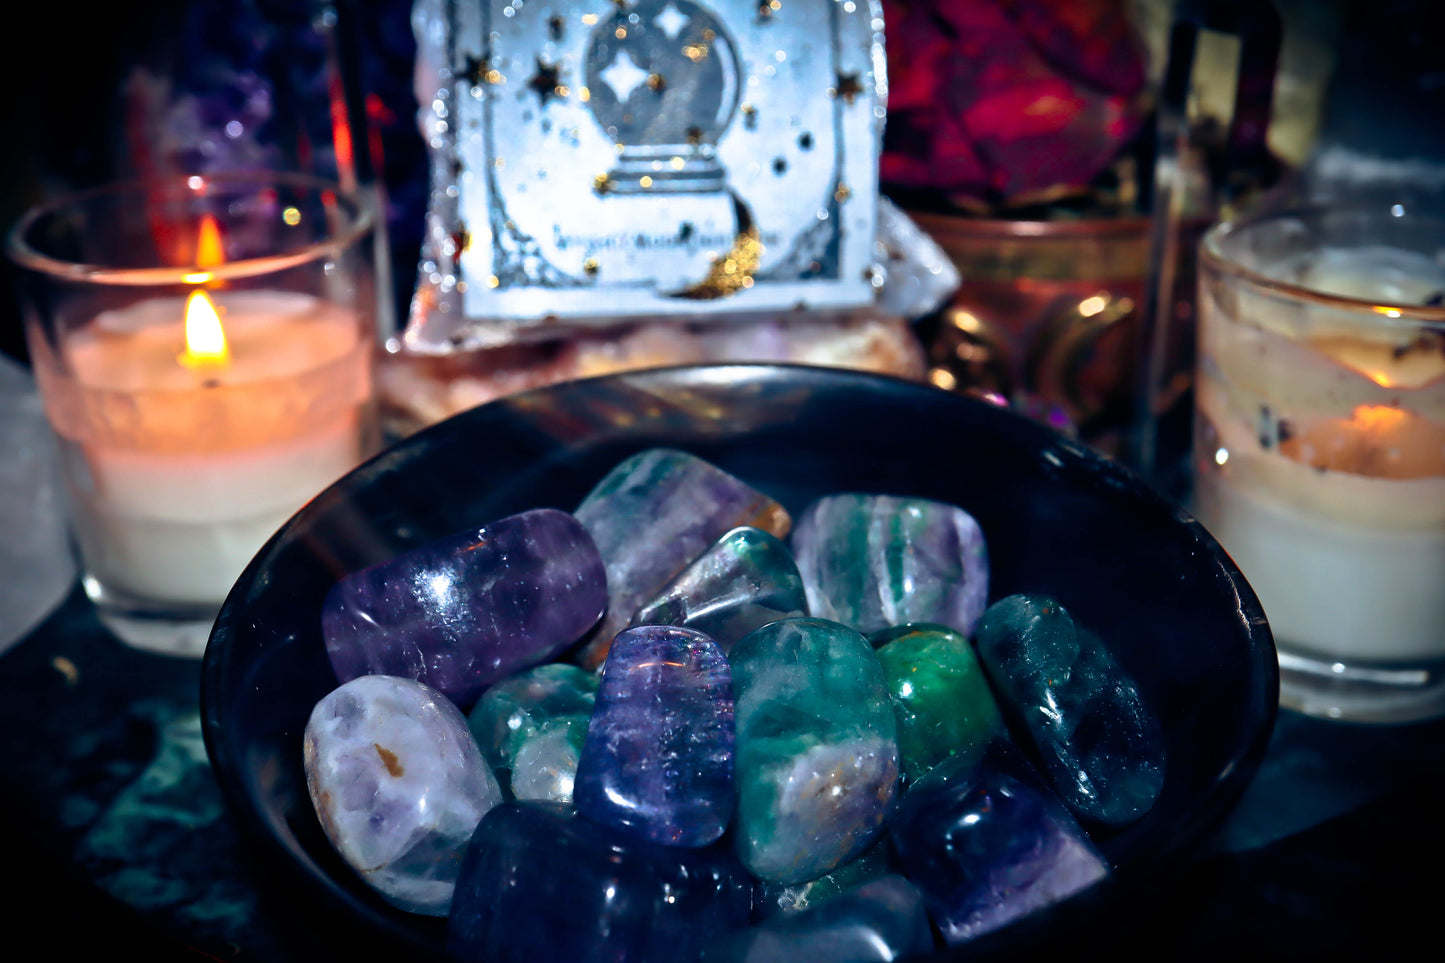 RAINBOW FLUORITE Healing Crystals Gemstones Spellcast for Manifestation, Power, Grounding, Love, Balance & More ~ One Bag of 4 Gems